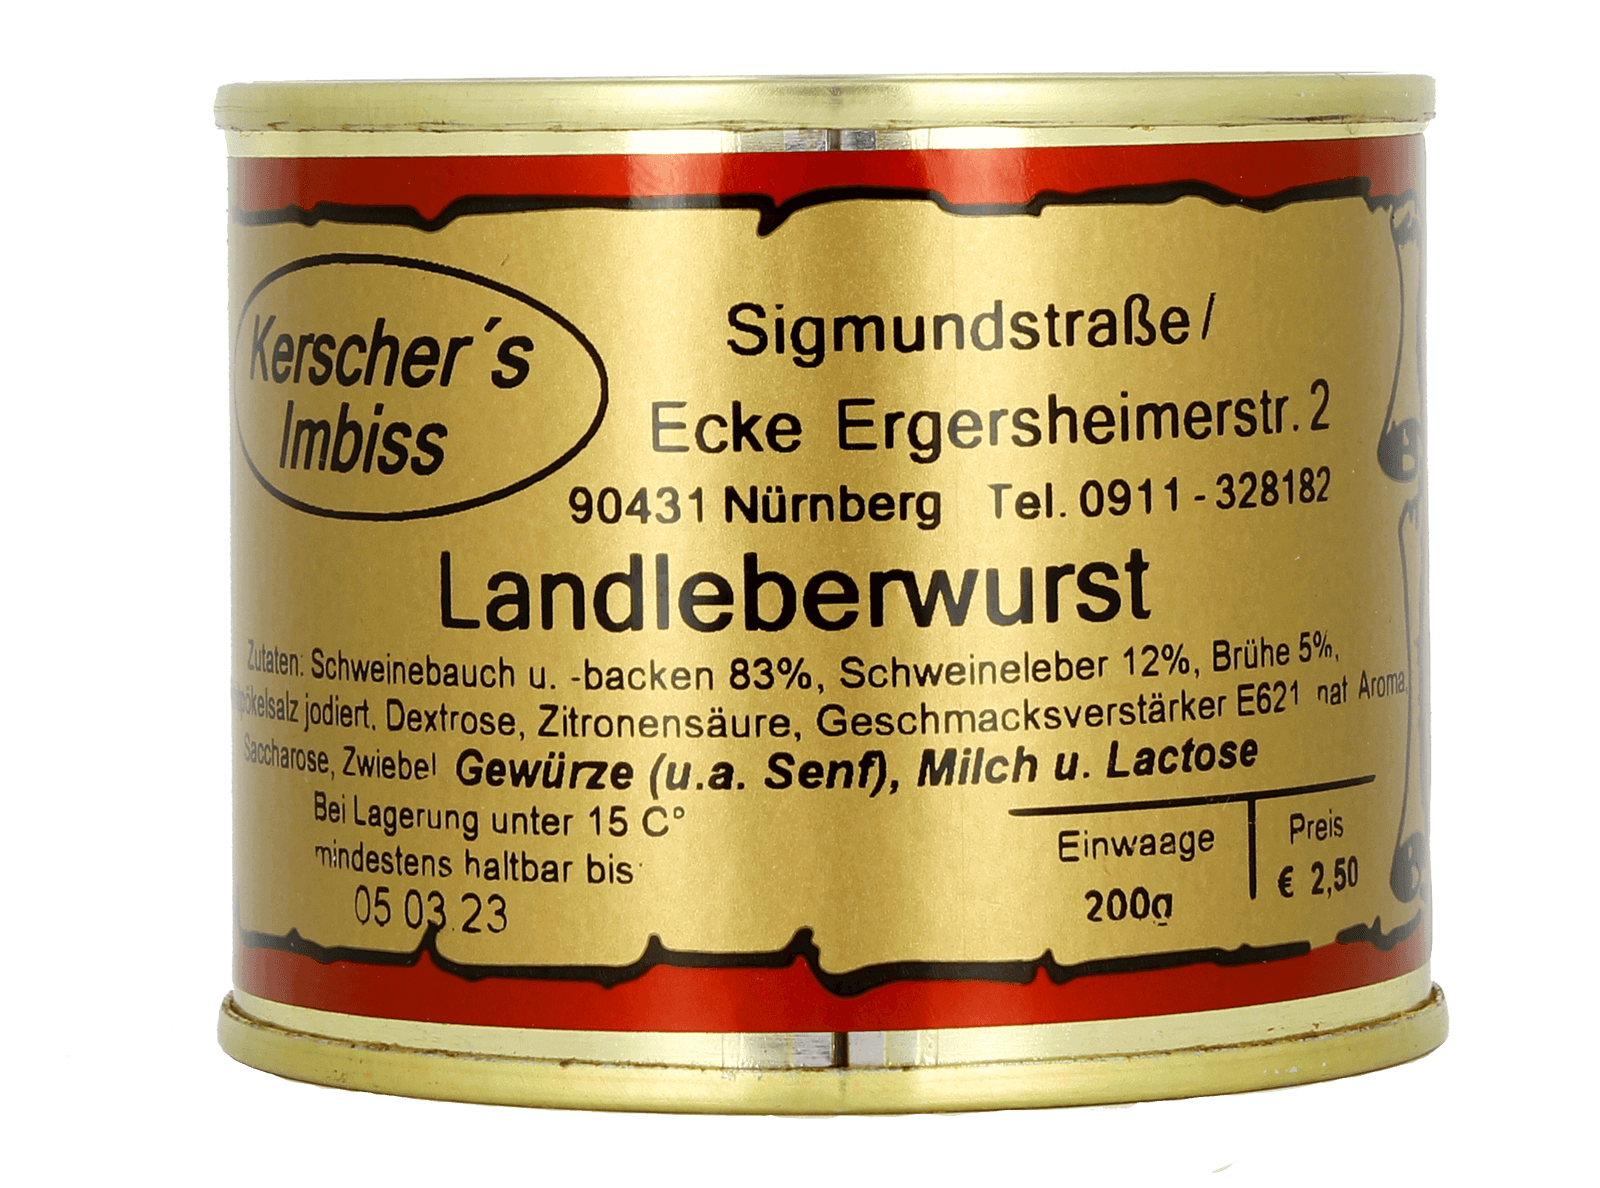 Landleberwurst